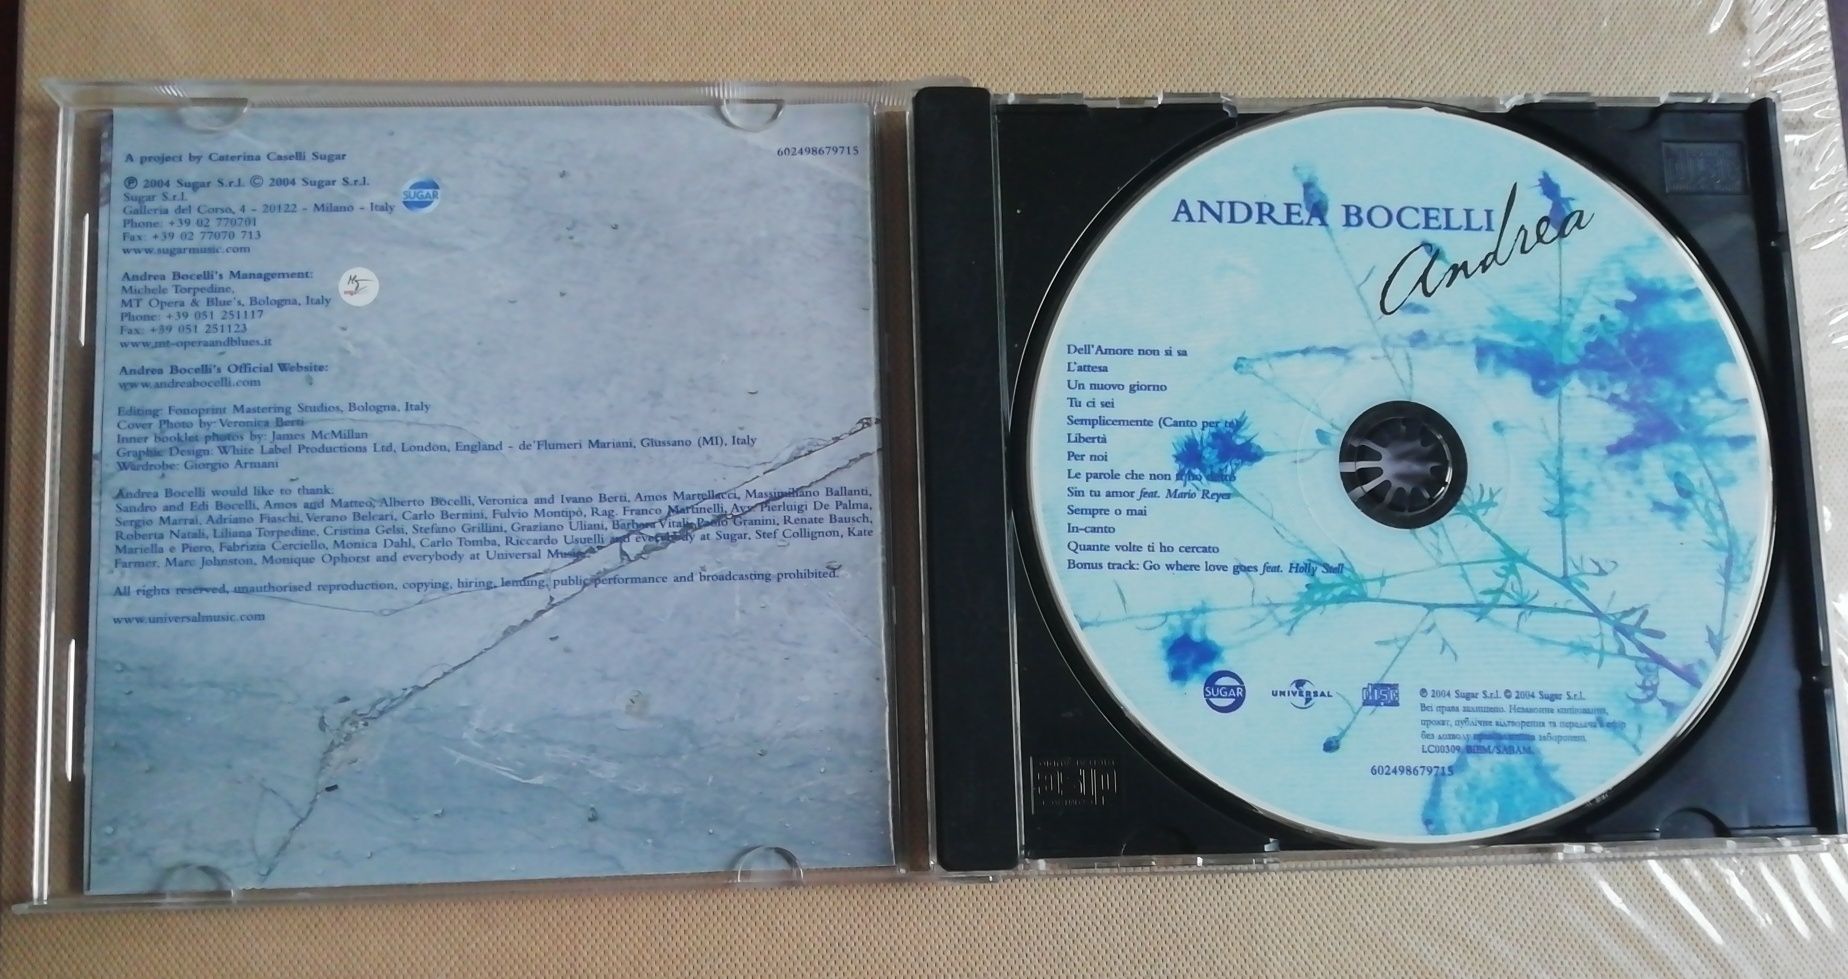 Музыка на диске ANDREA BOCELLI

1996- Romanza:

1. Can Te Partir

2. V